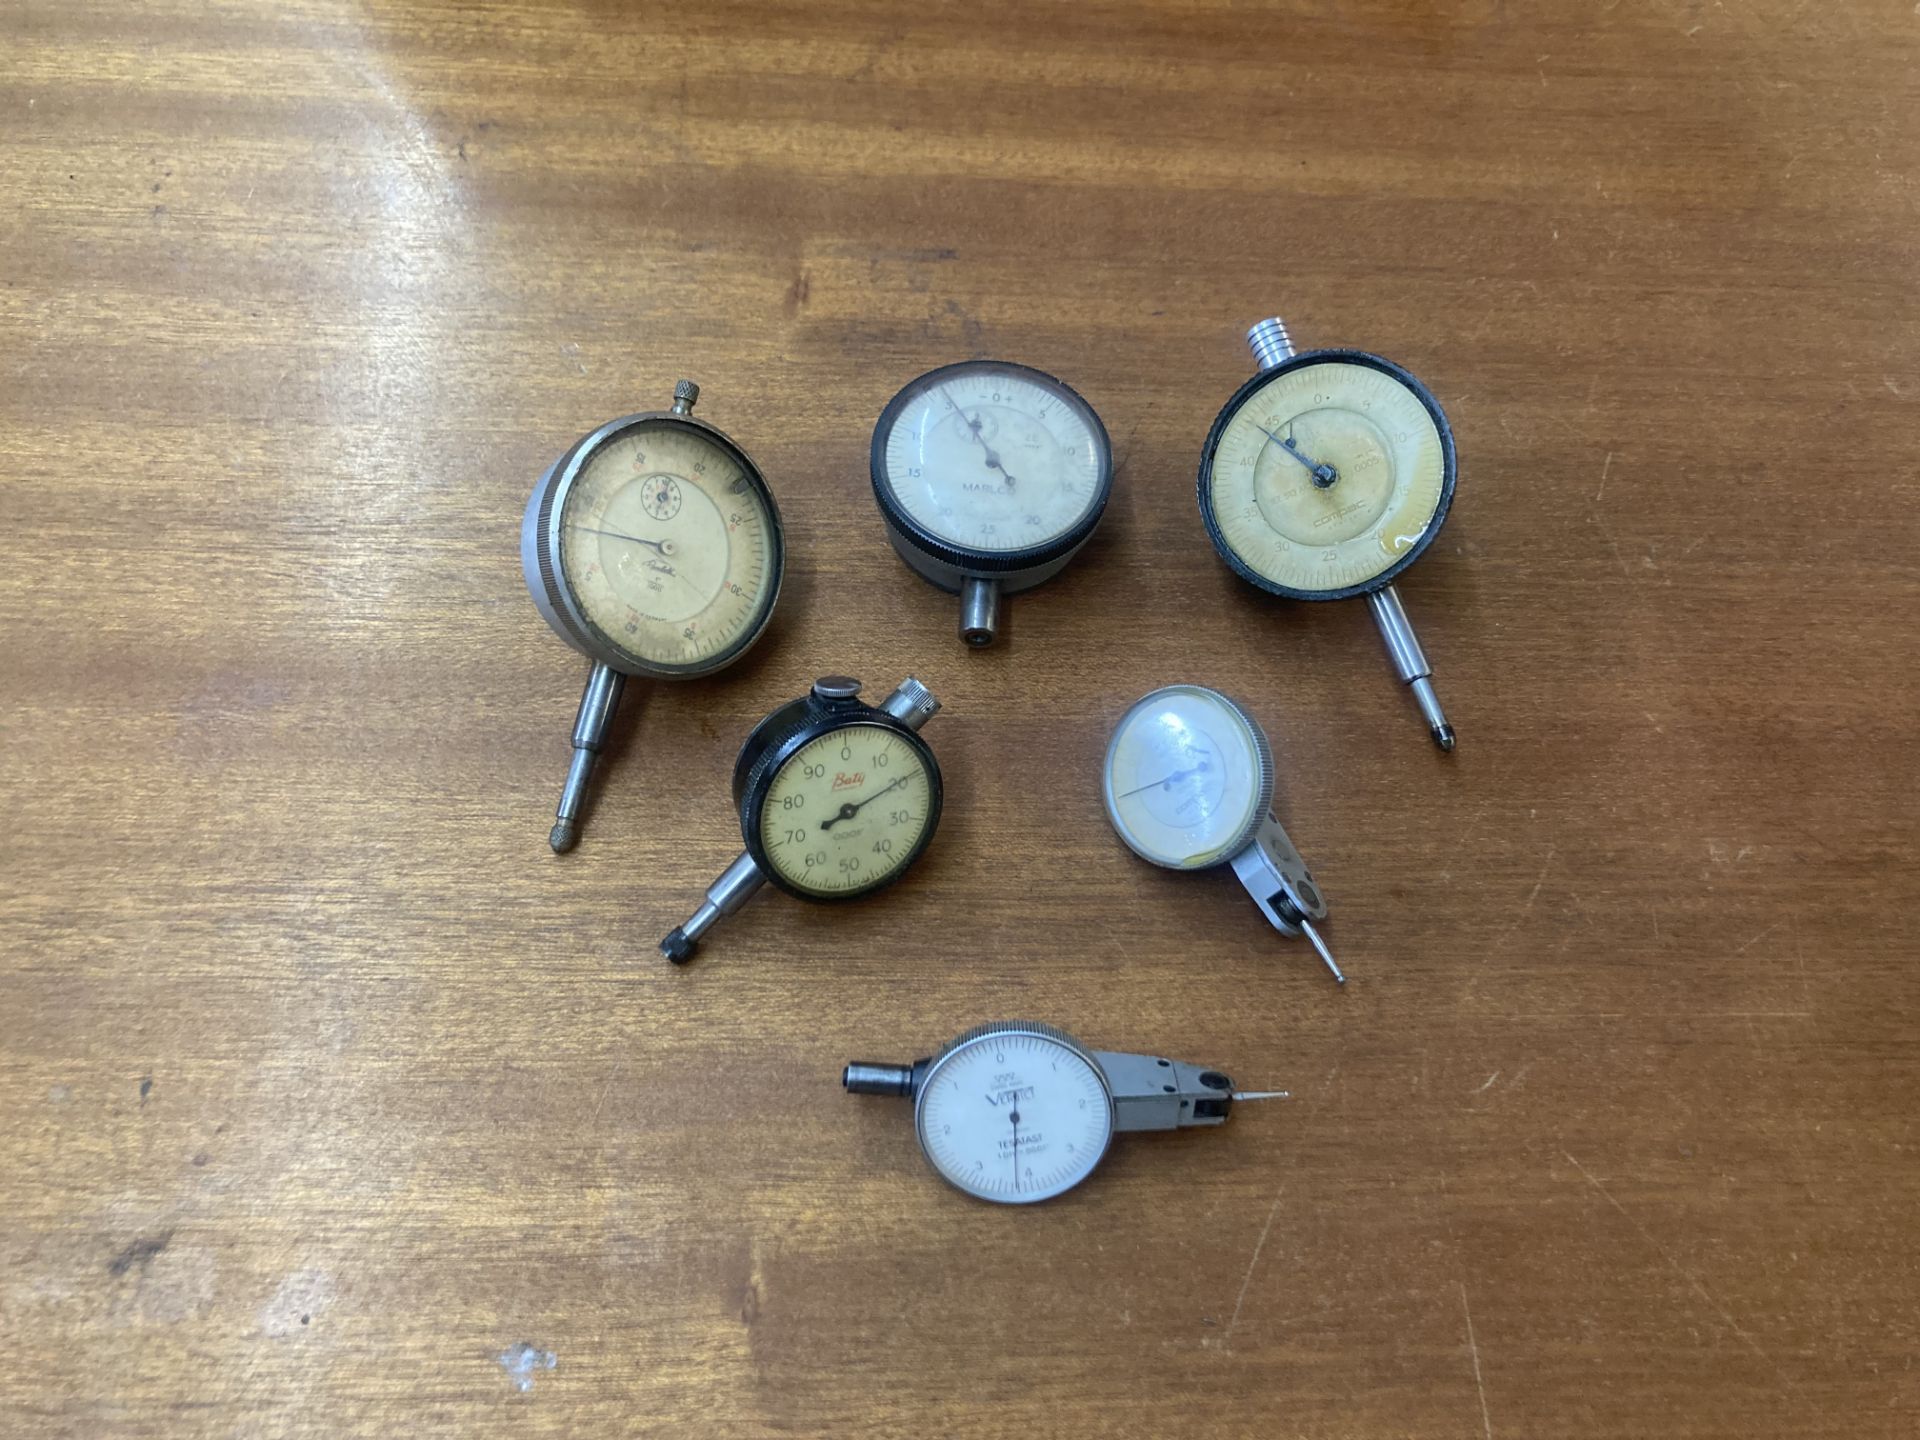 Measuring clocks - Image 4 of 4